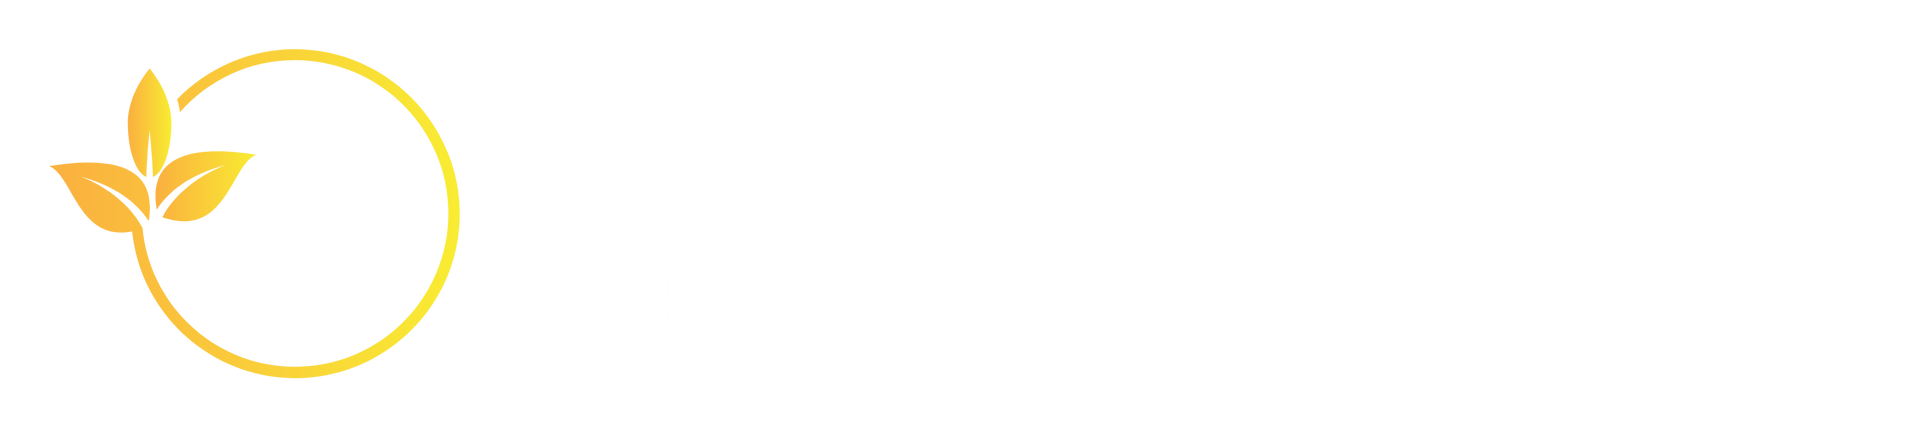 Ideario Partners - Gestión & I+D+i